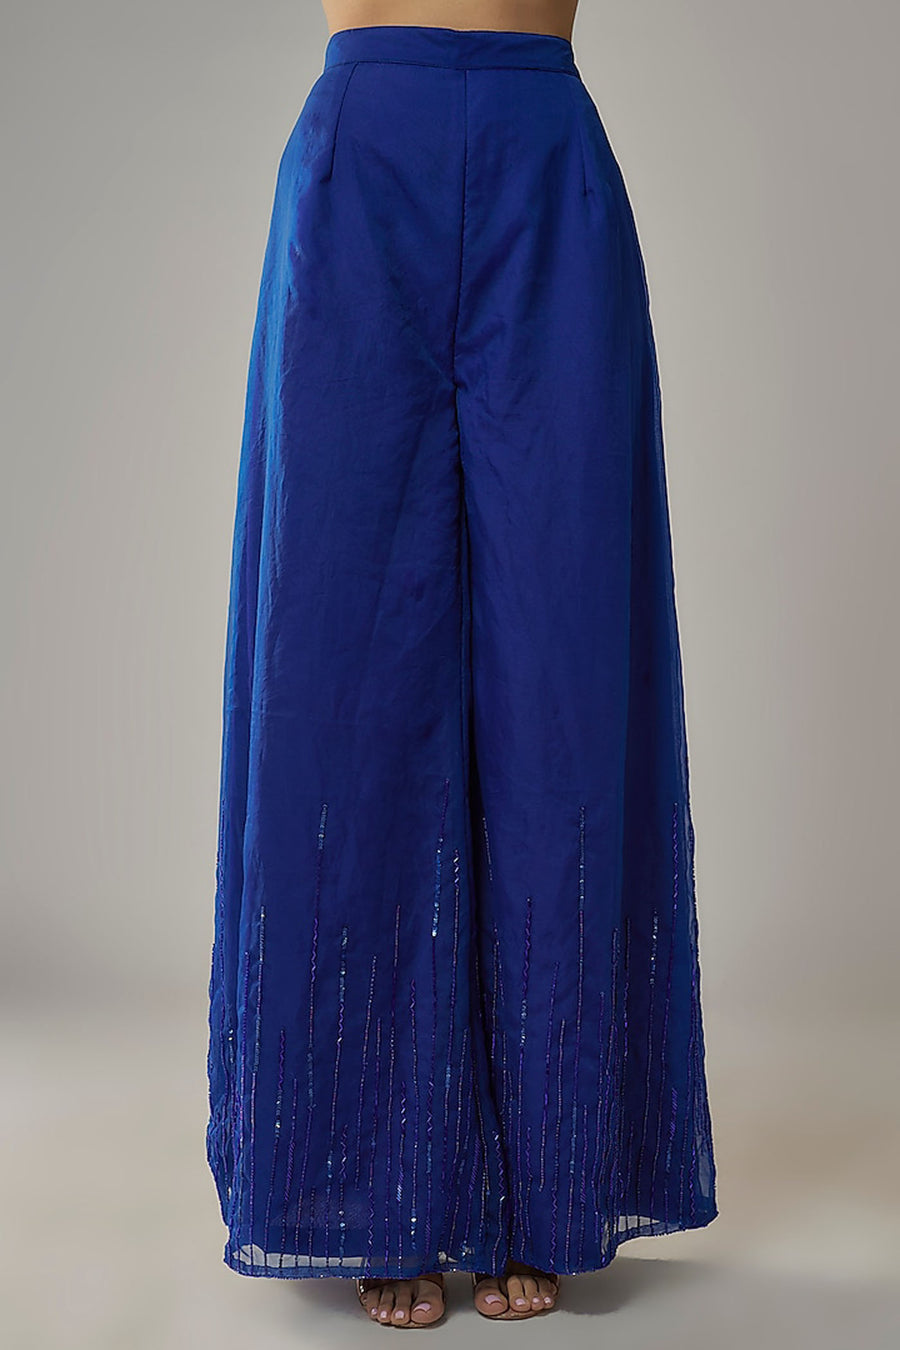 Royal Embroidered Blue Choli, Pants And Jacket Set